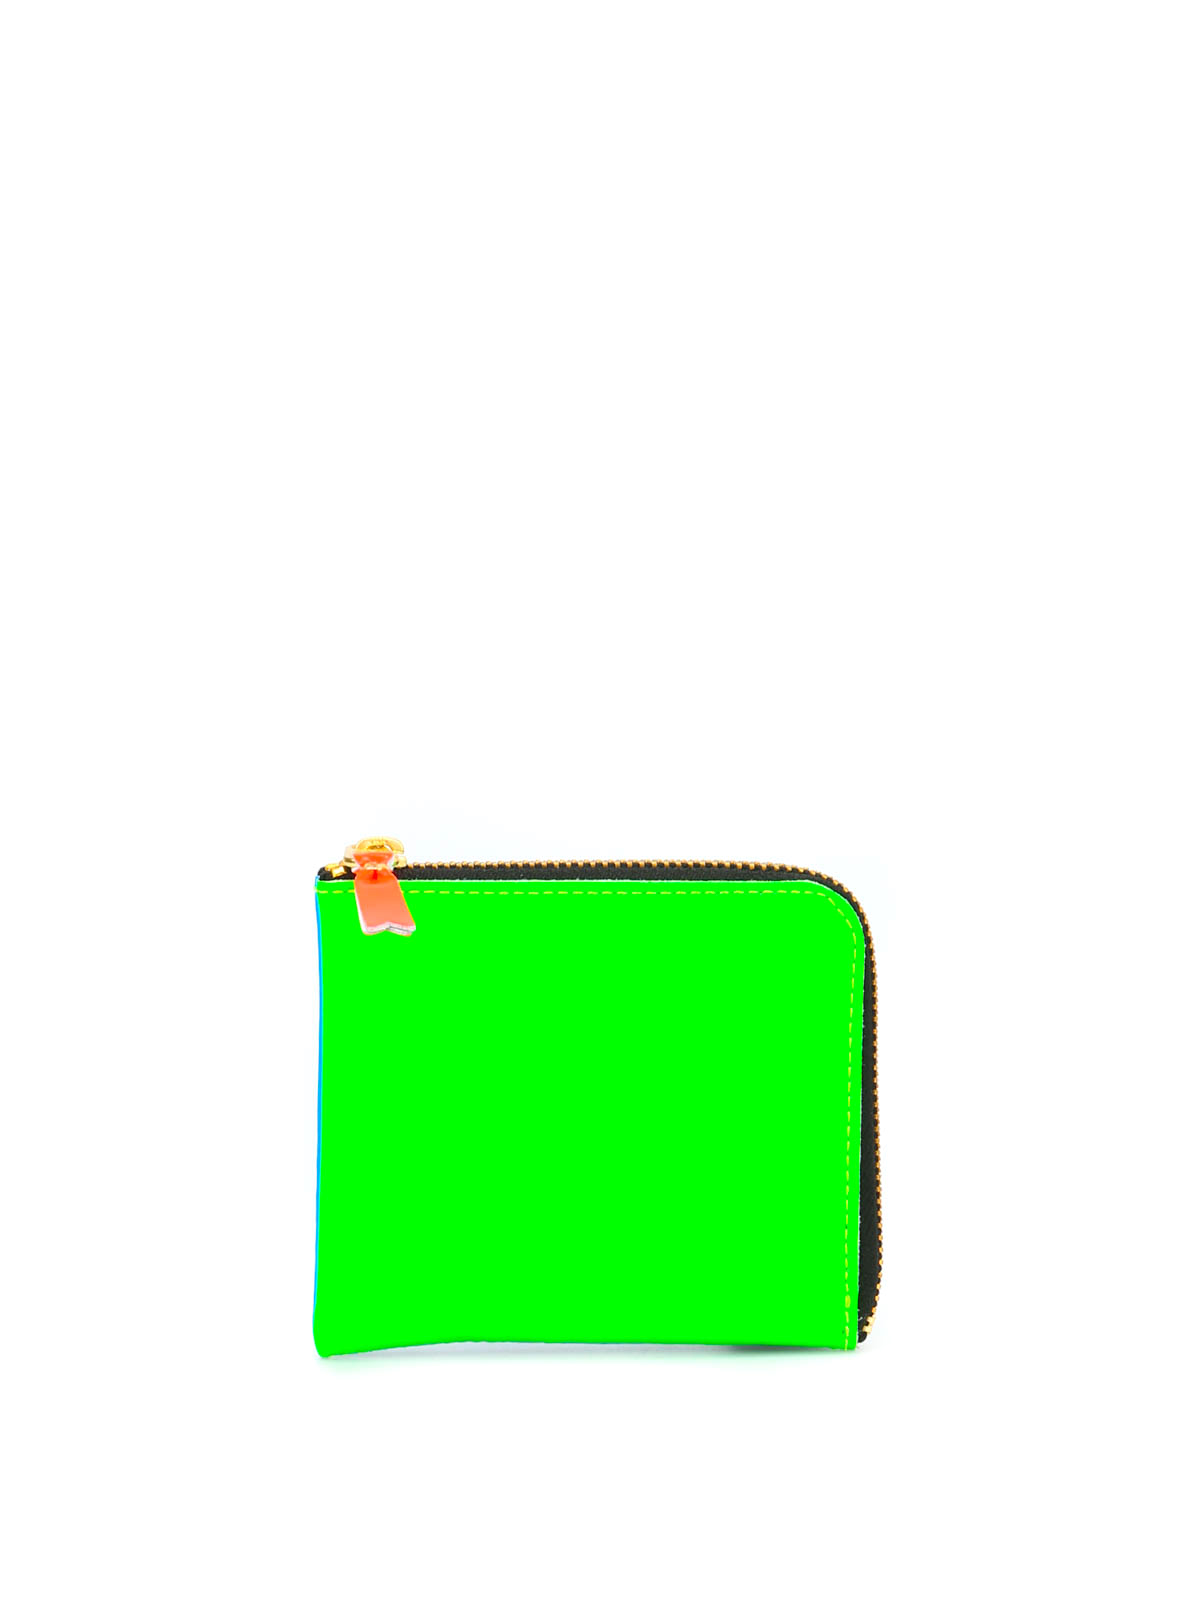 Comme Des Garçons L-zip Super Fluo Wallet In Green